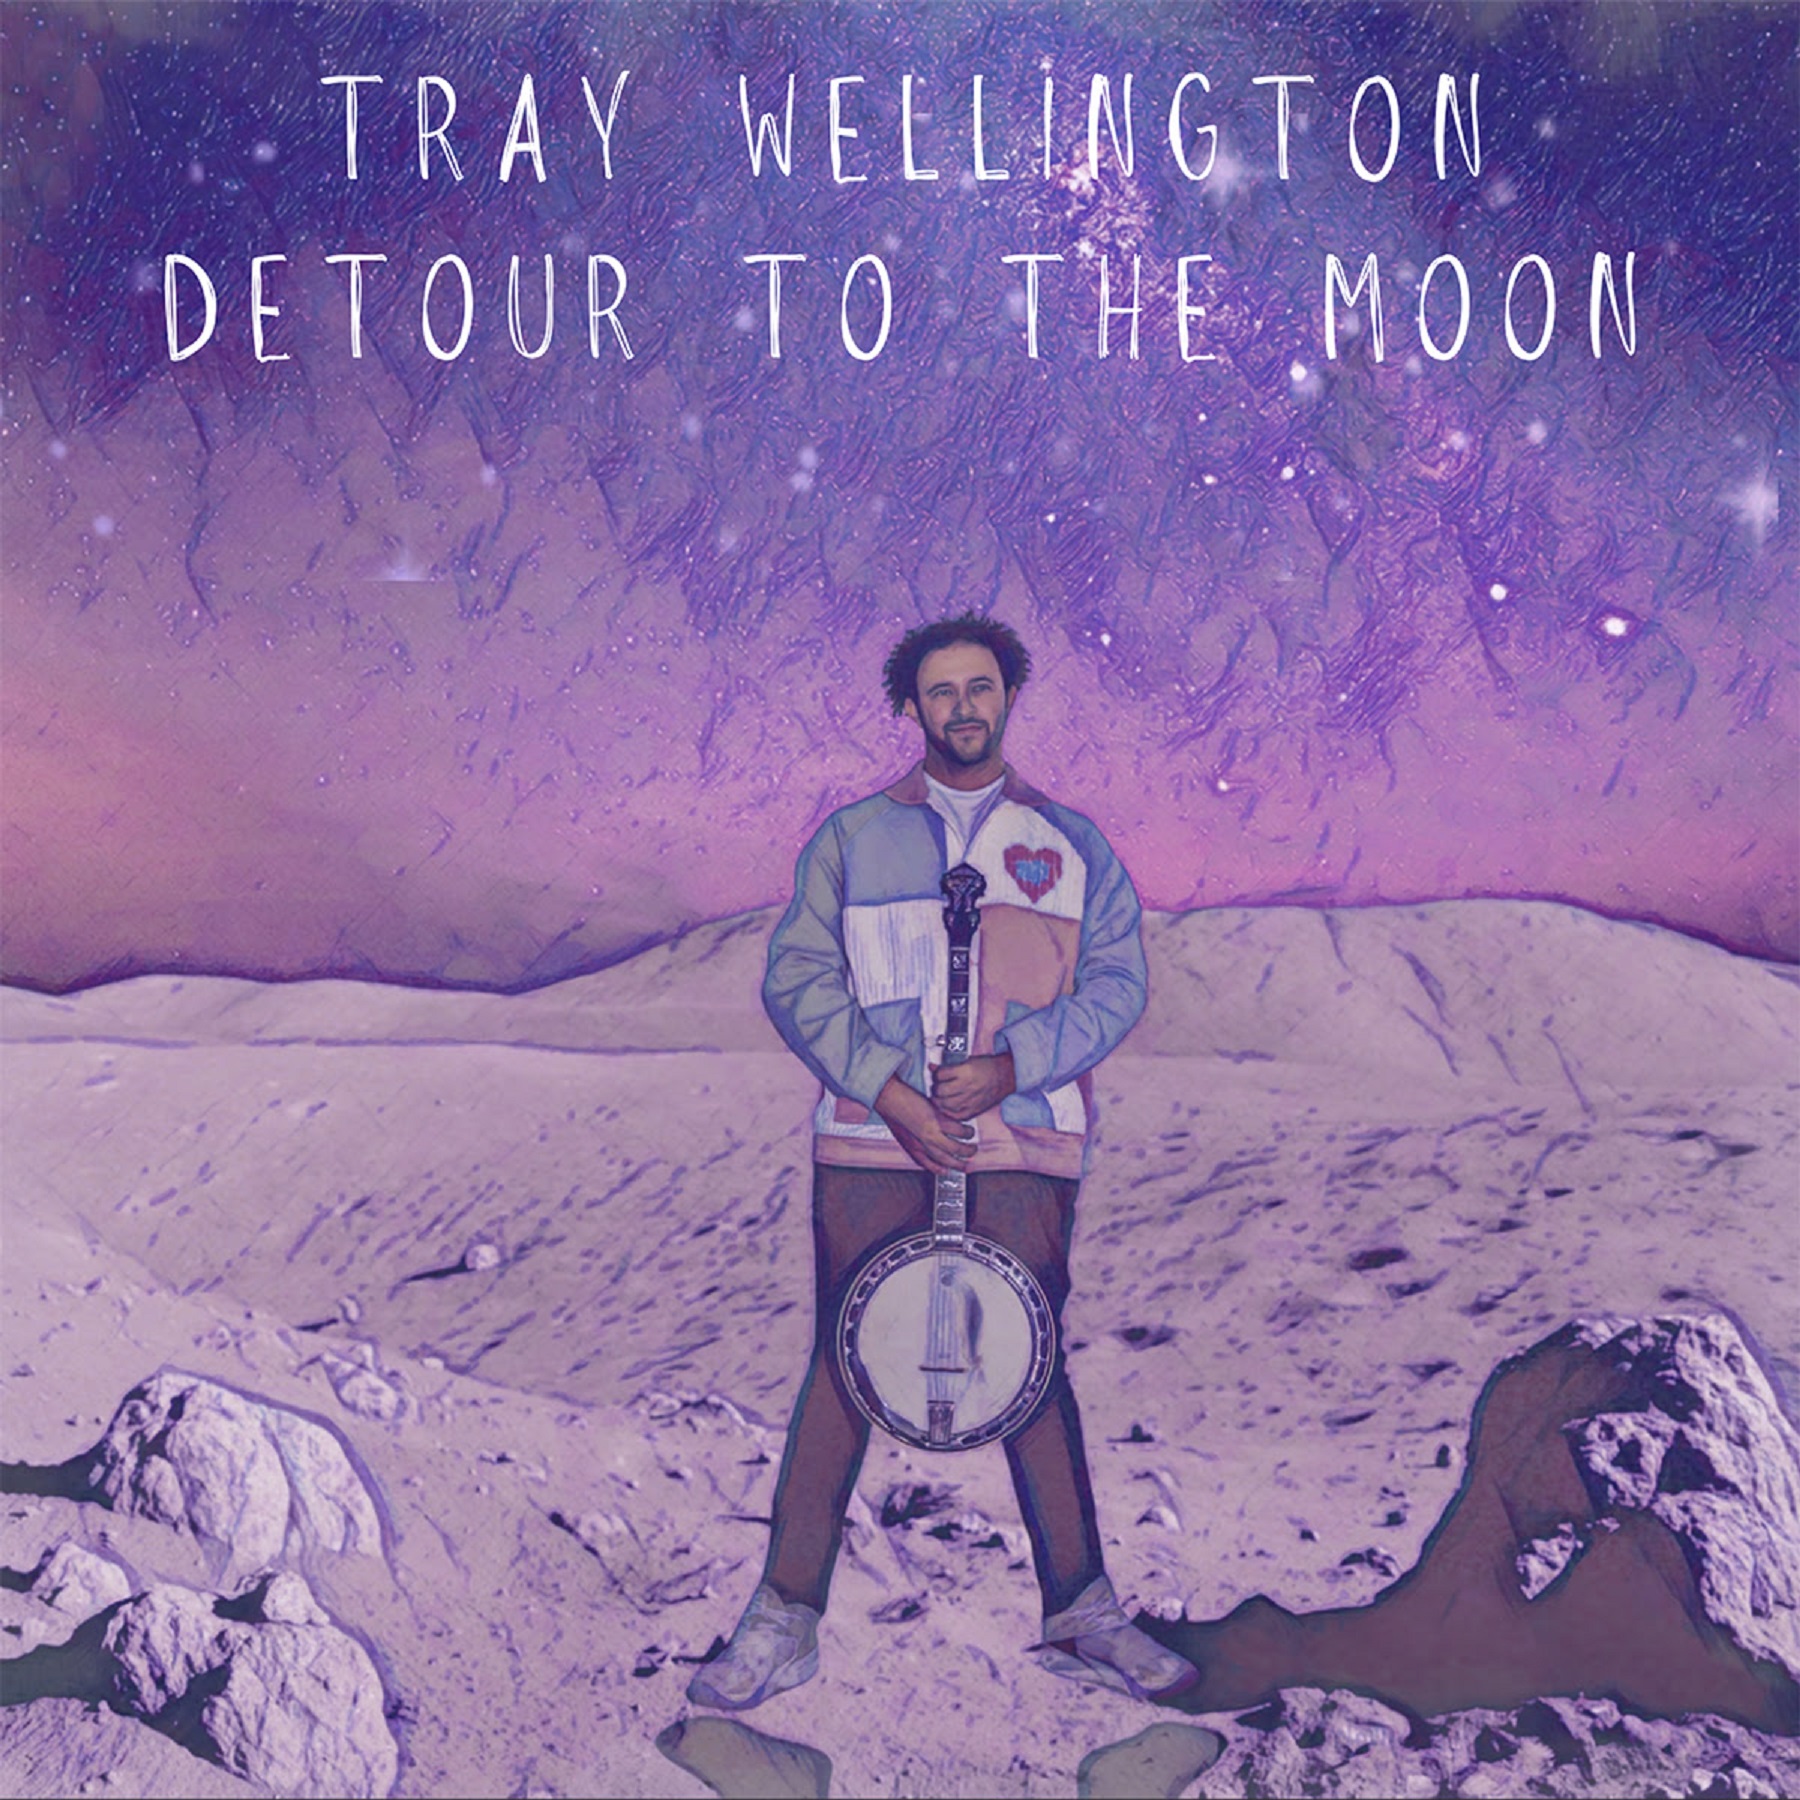 Tray Wellington takes a Detour to the Moon on upcoming album